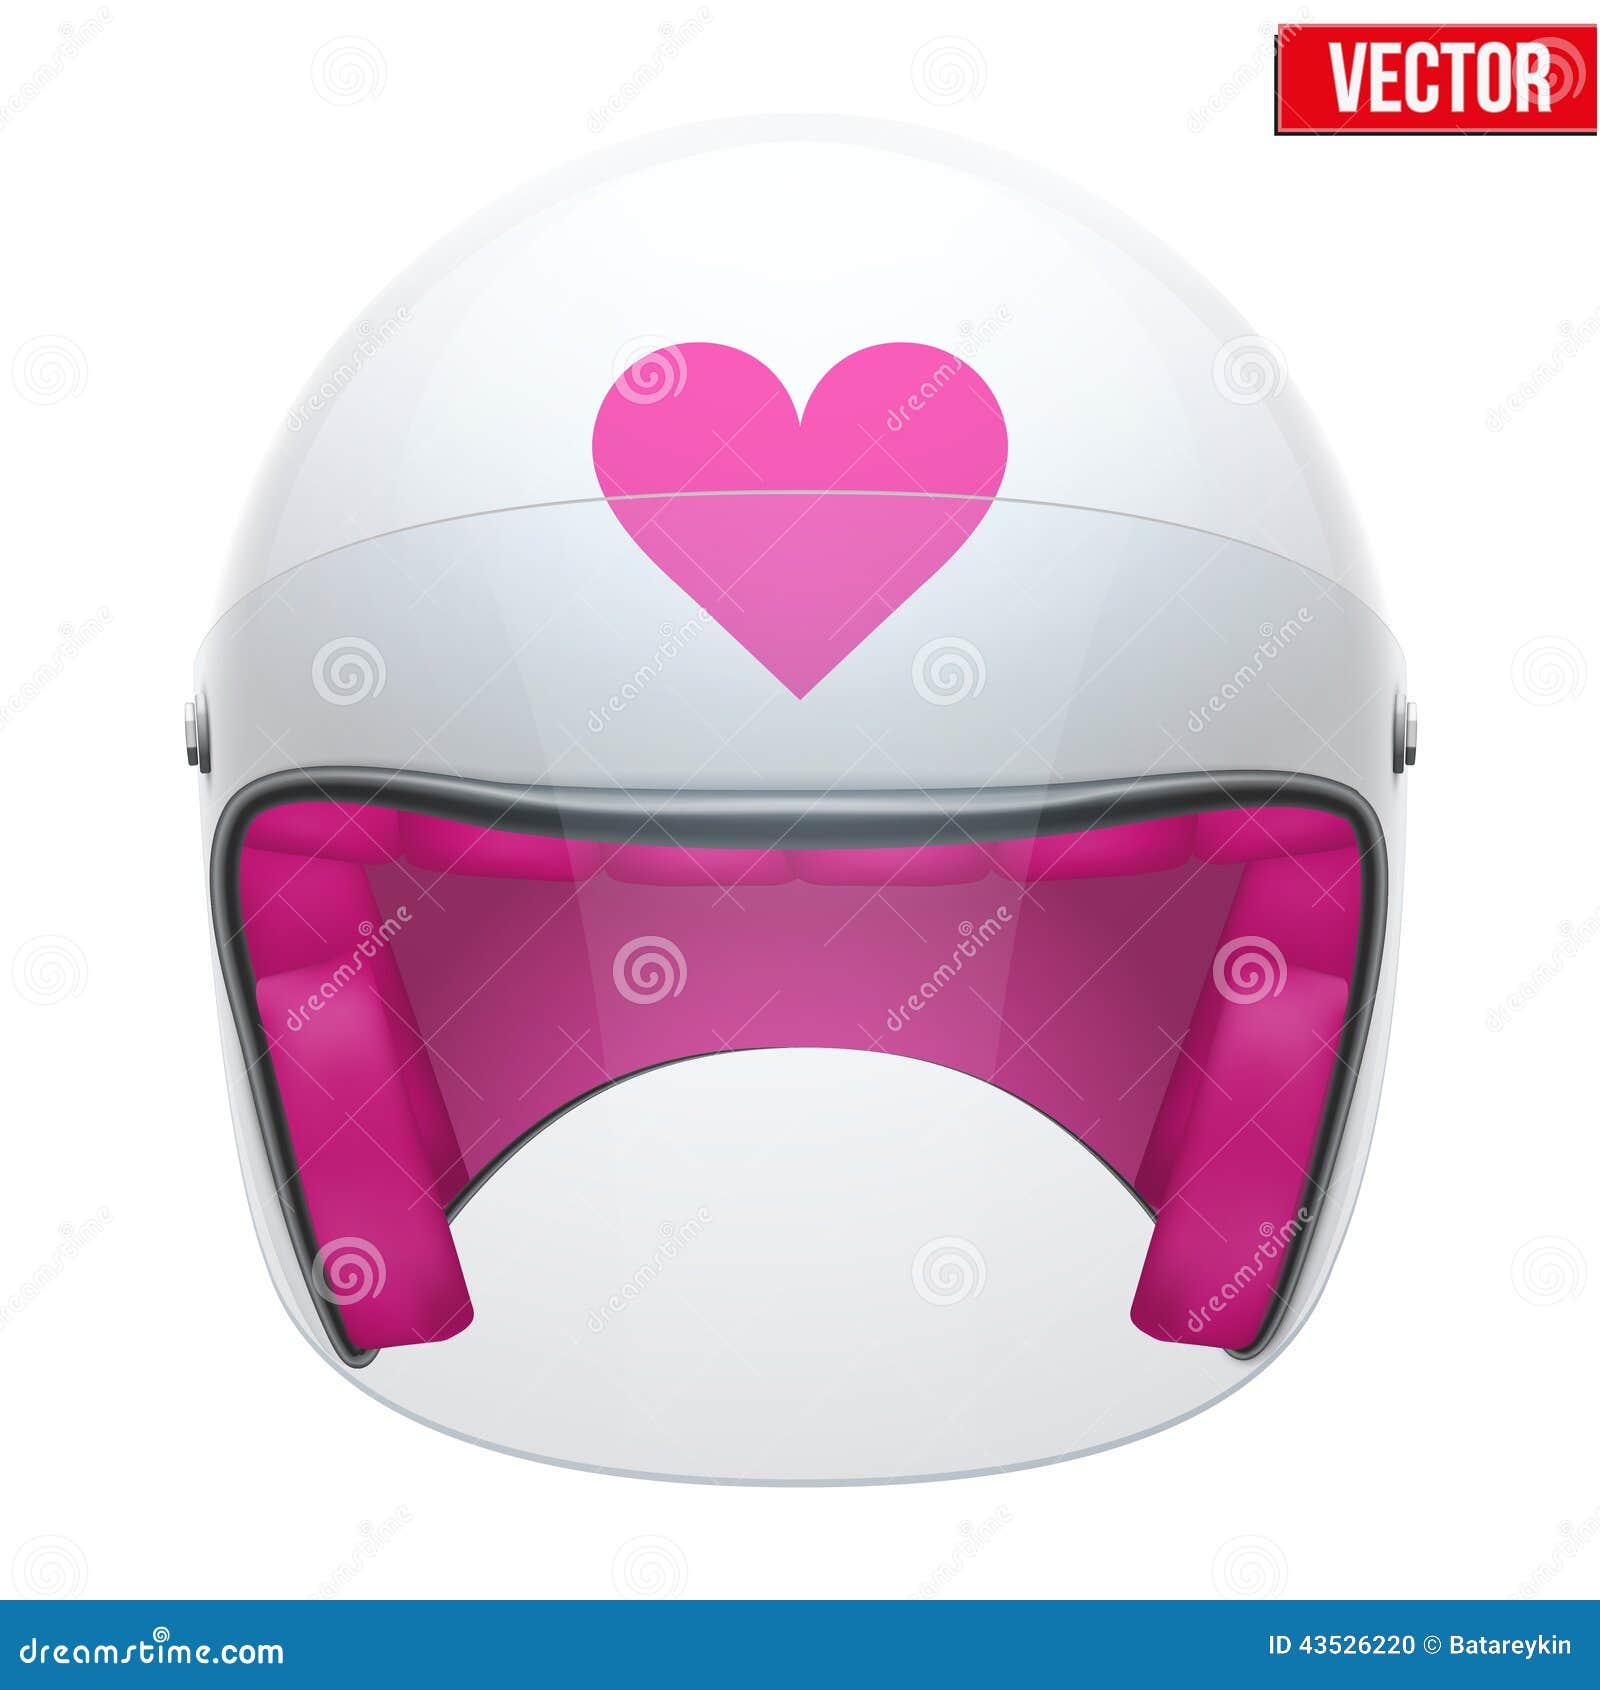 pink female motorcycle helmet with glass visor.